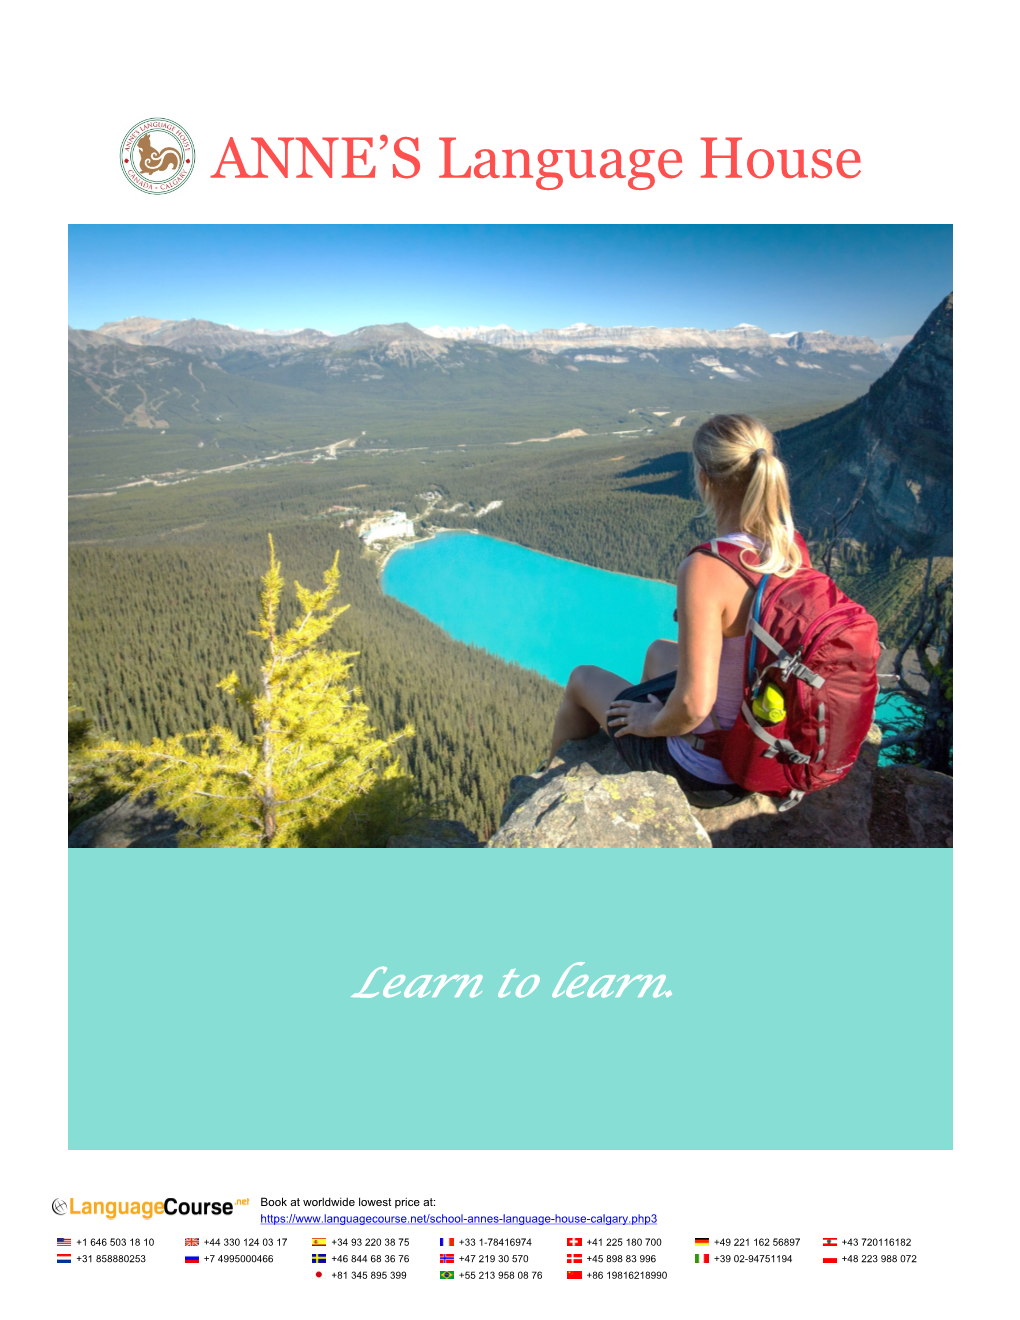 Annes Language House, Calgary